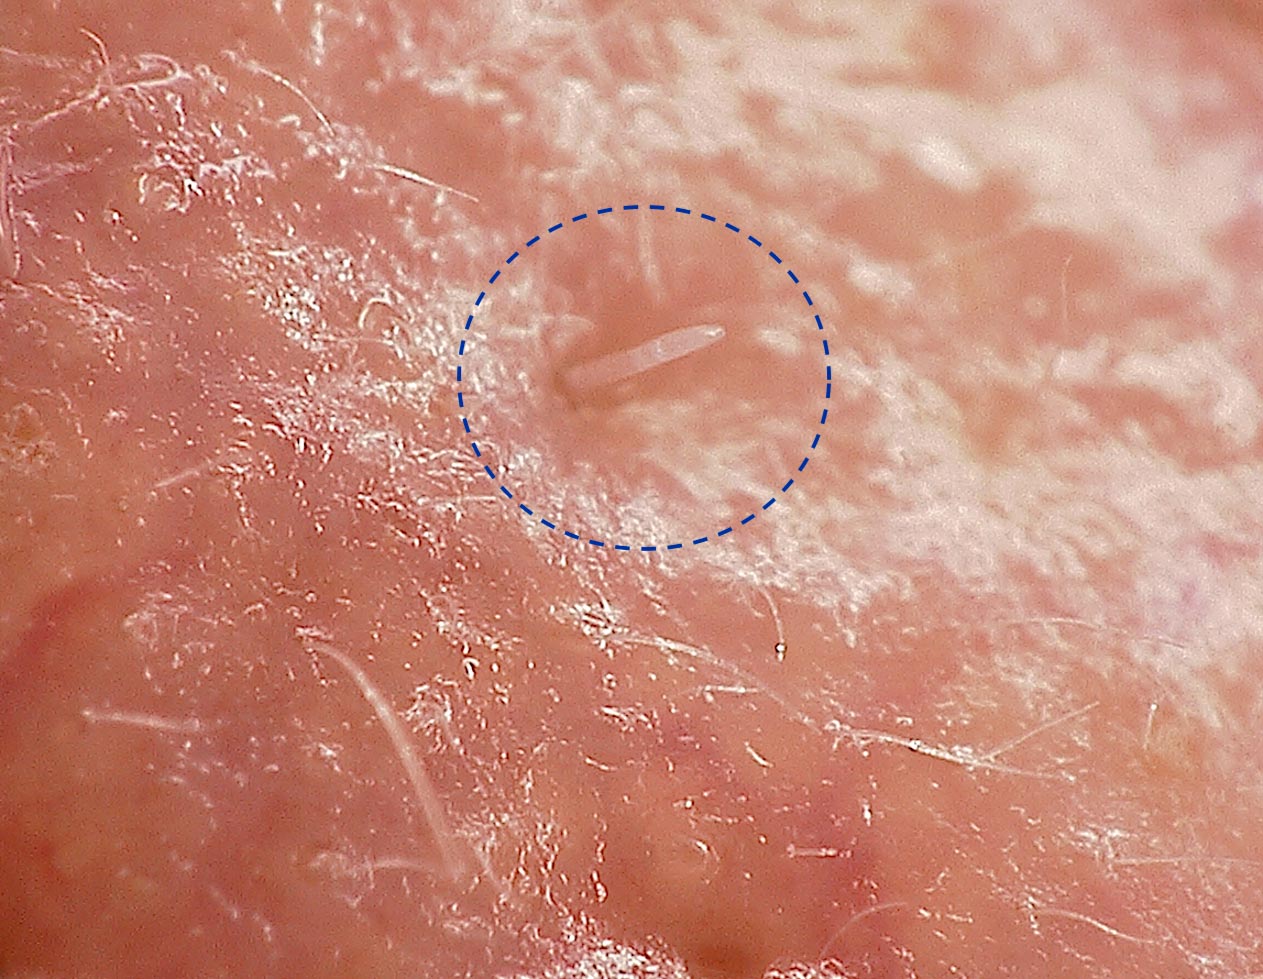 Demodex folliculorum mite on the skin